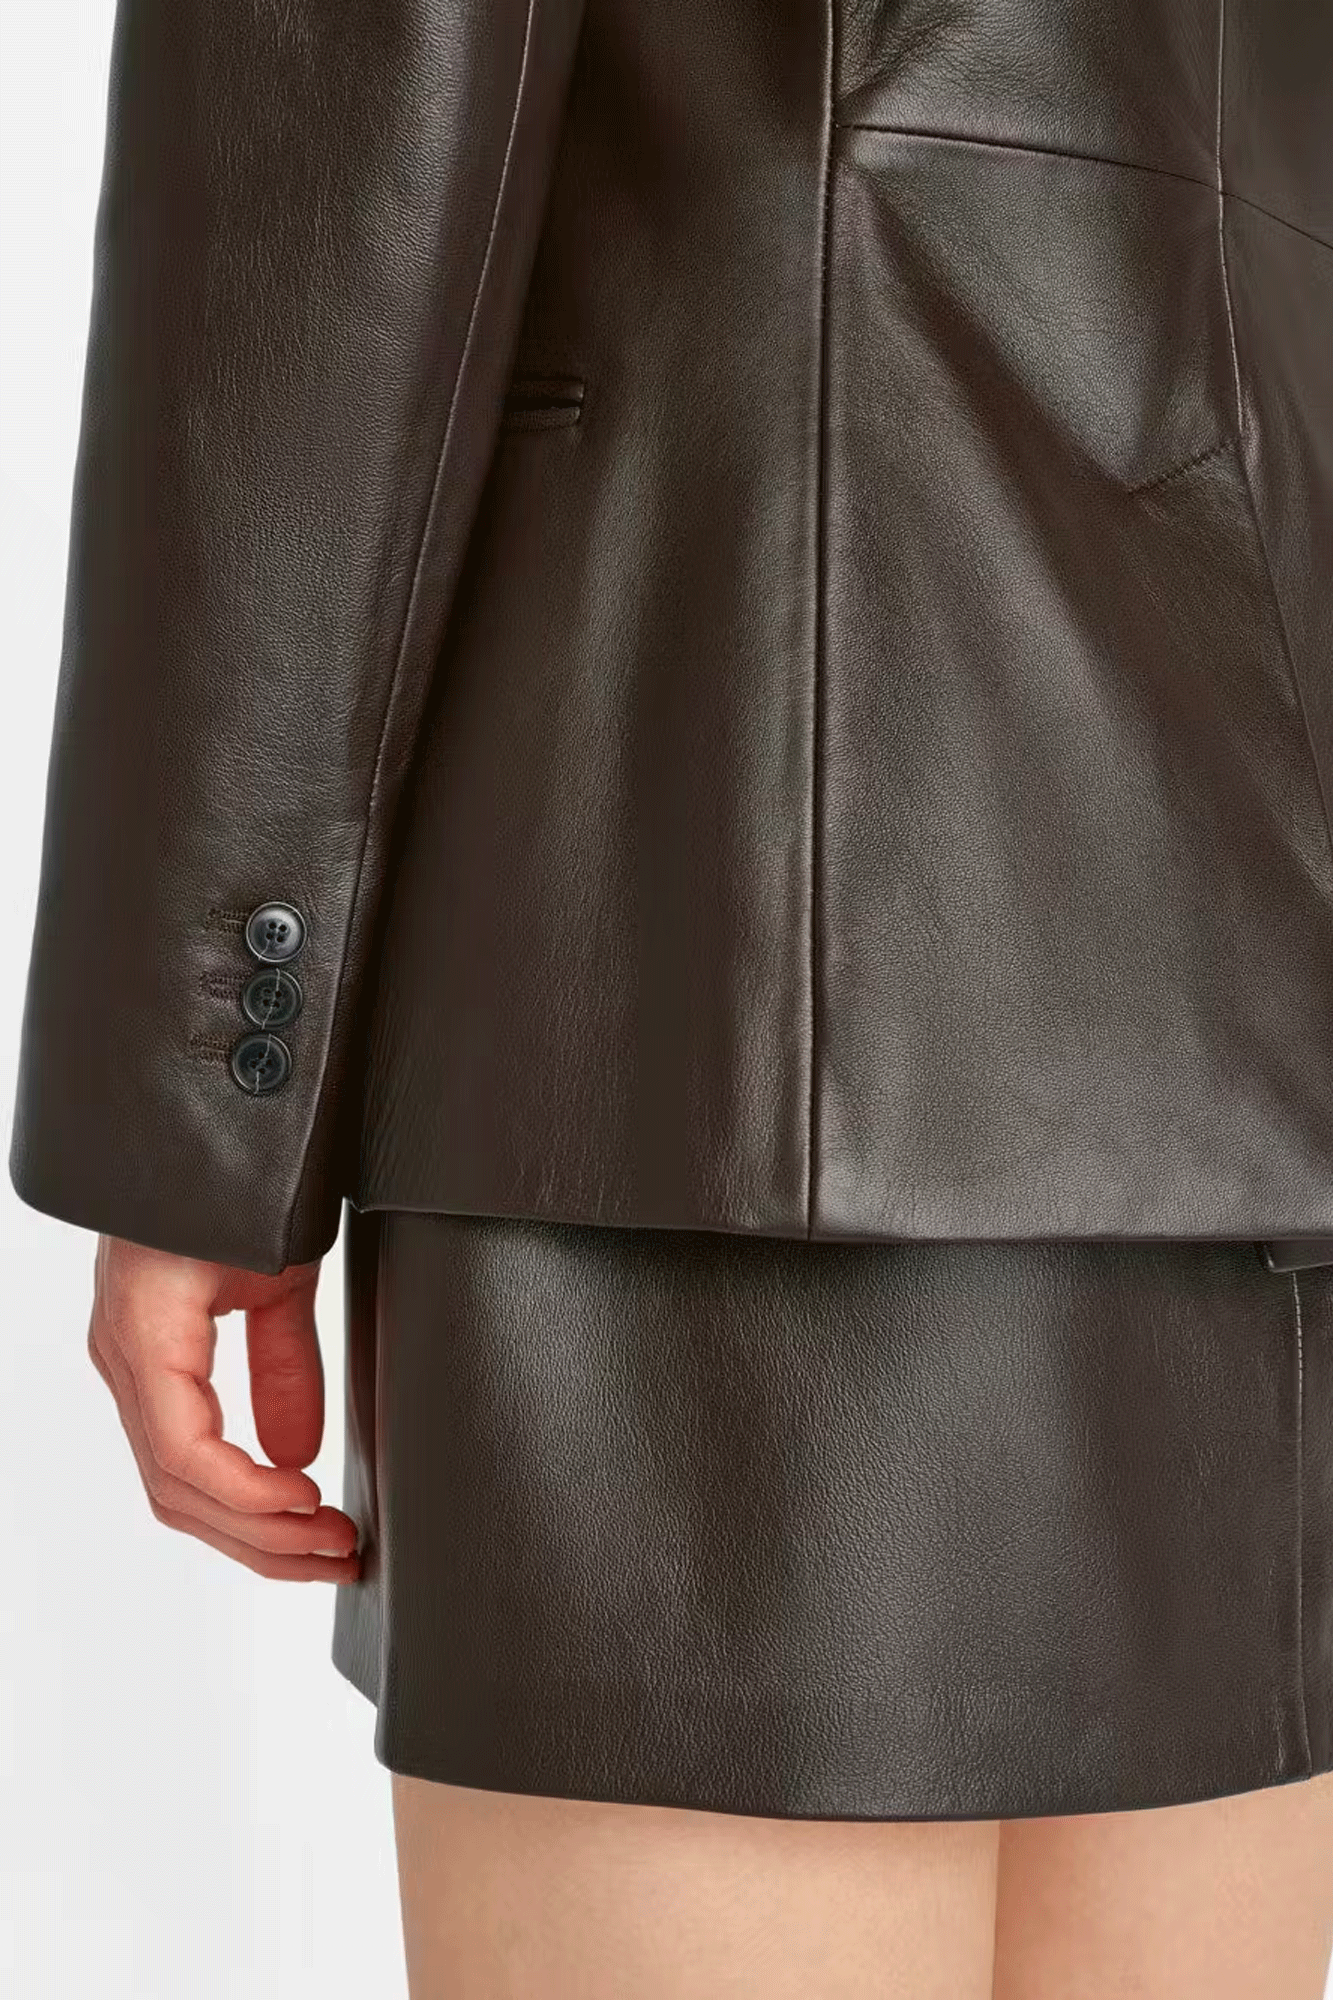 The Femme Leather Blazer